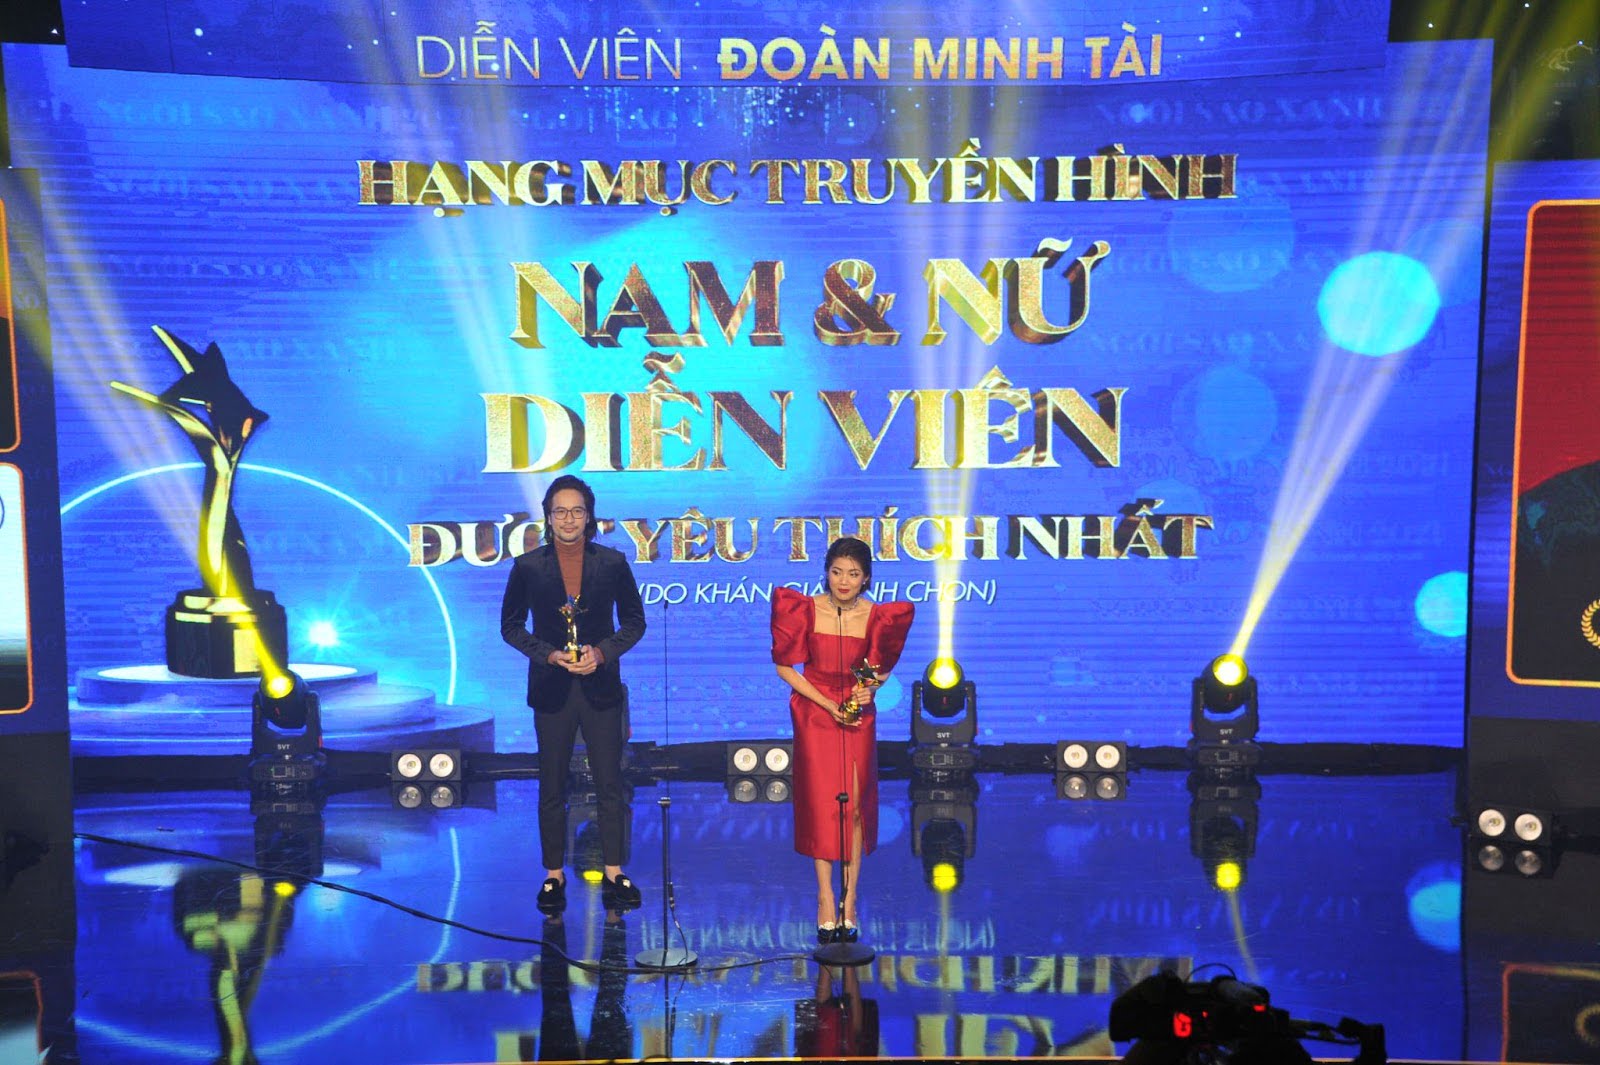 Doan Minh Tai Dam Phuong Linh